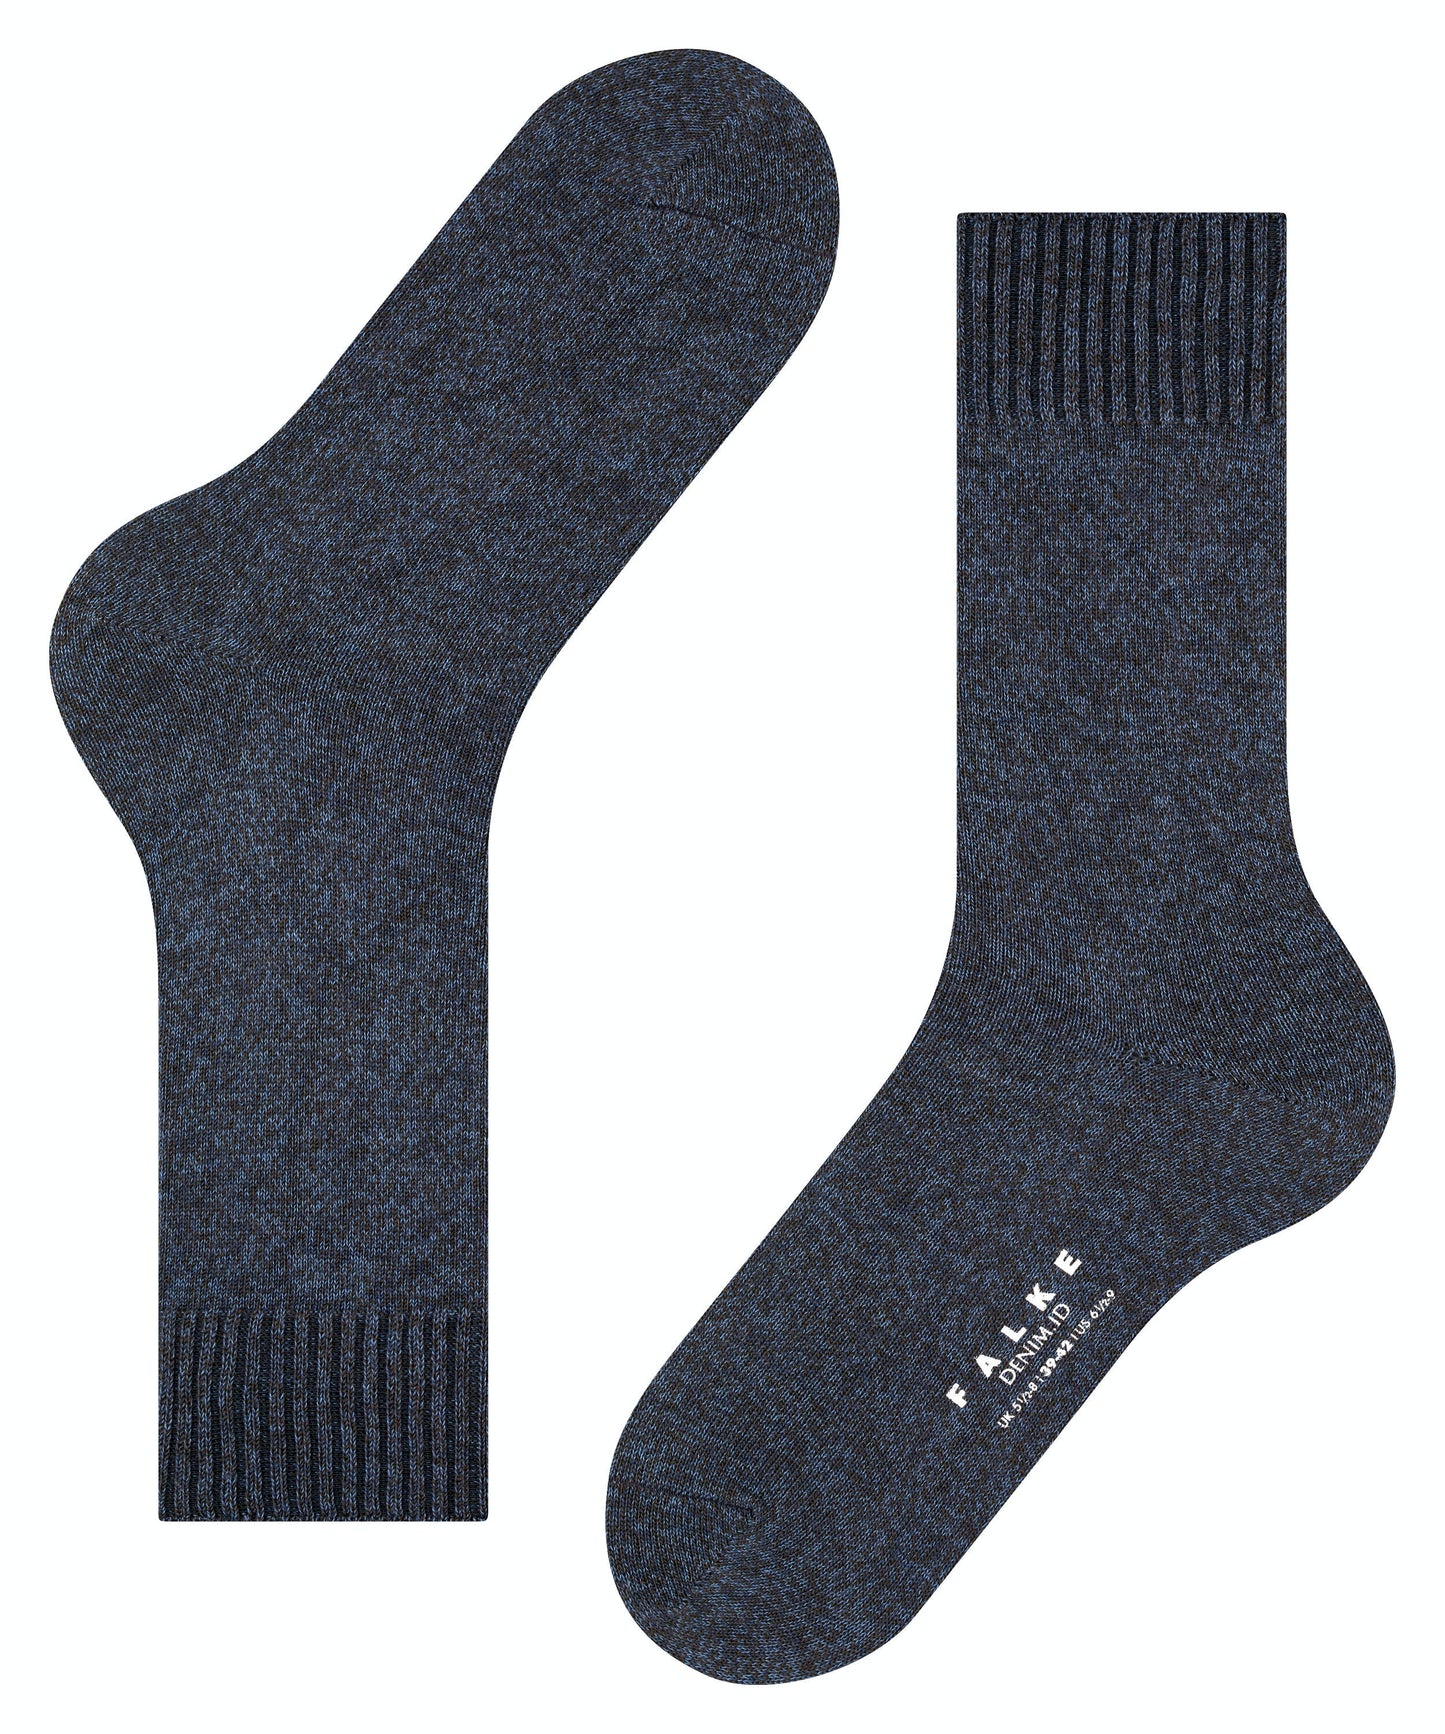 FALKE DENIM ID Socks in Blue-Brown